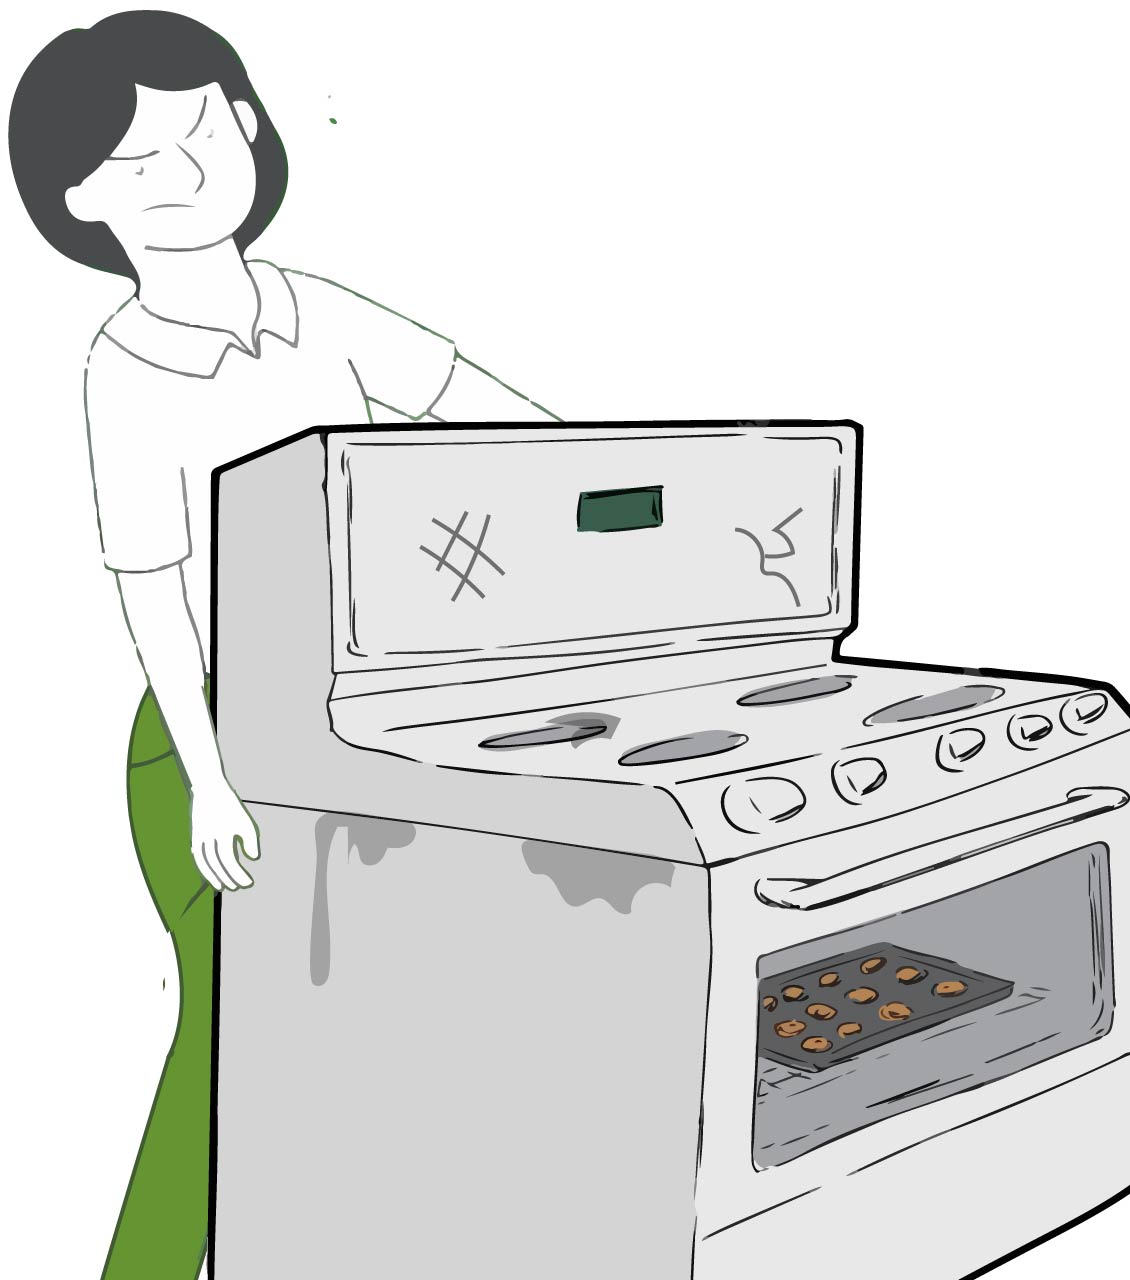 Boca Raton oven removal services